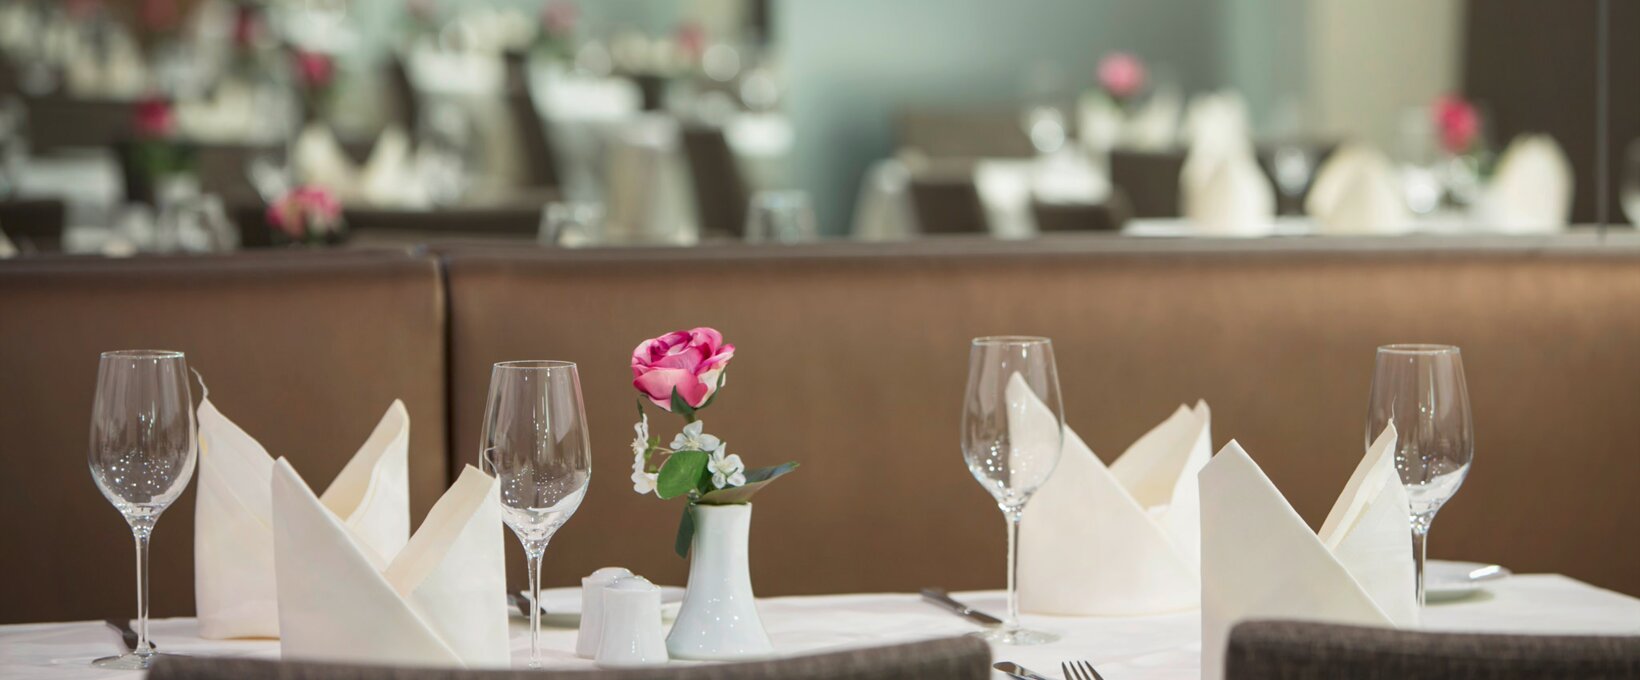 Restaurant Tafelspitz with laid table | Hotel Schillerpark in Linz